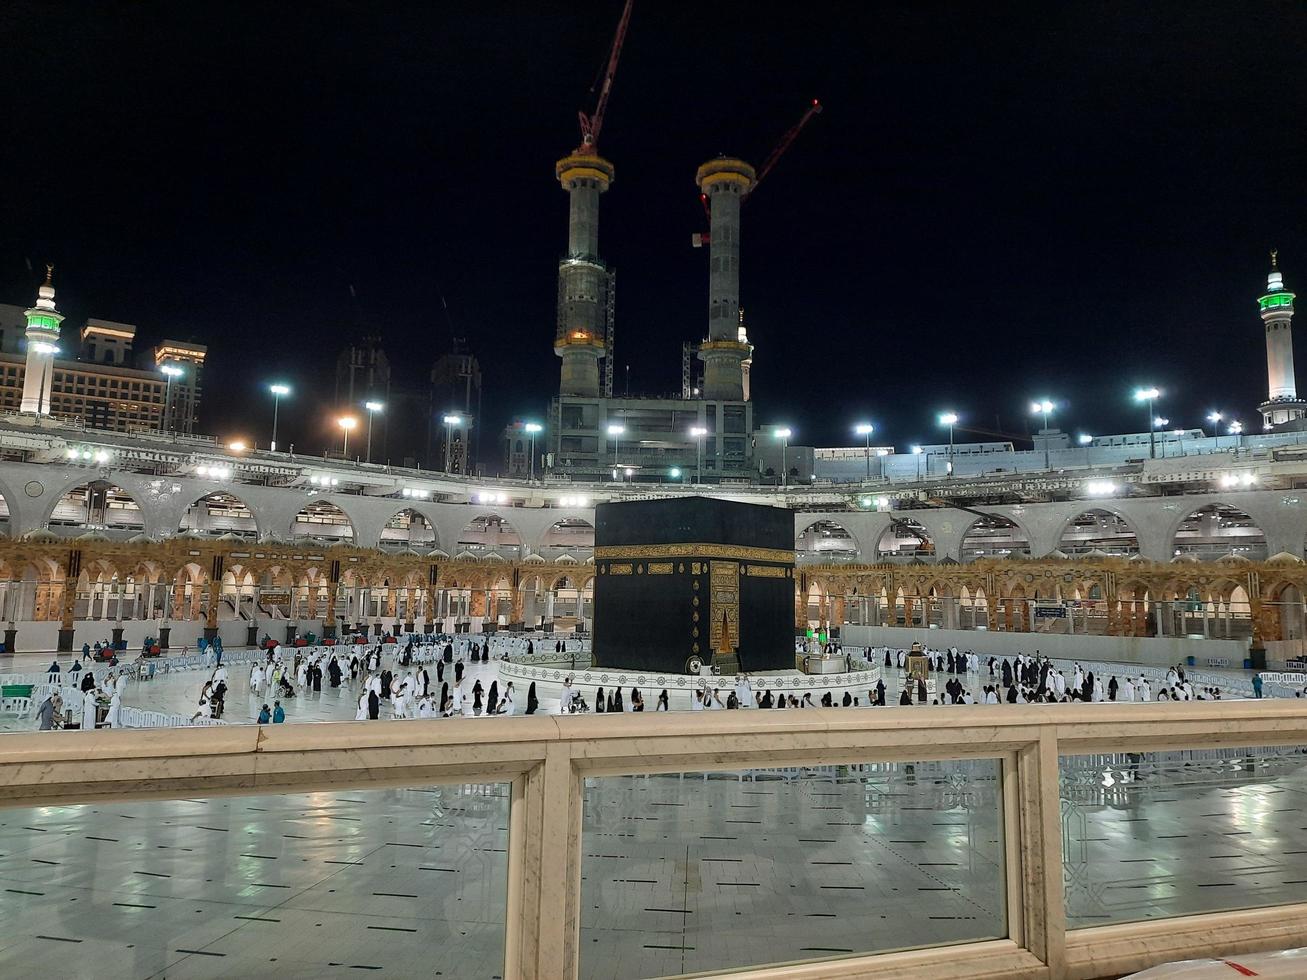 makkah, saoedi-arabië - mooie nacht van masjid al haram, makkah foto